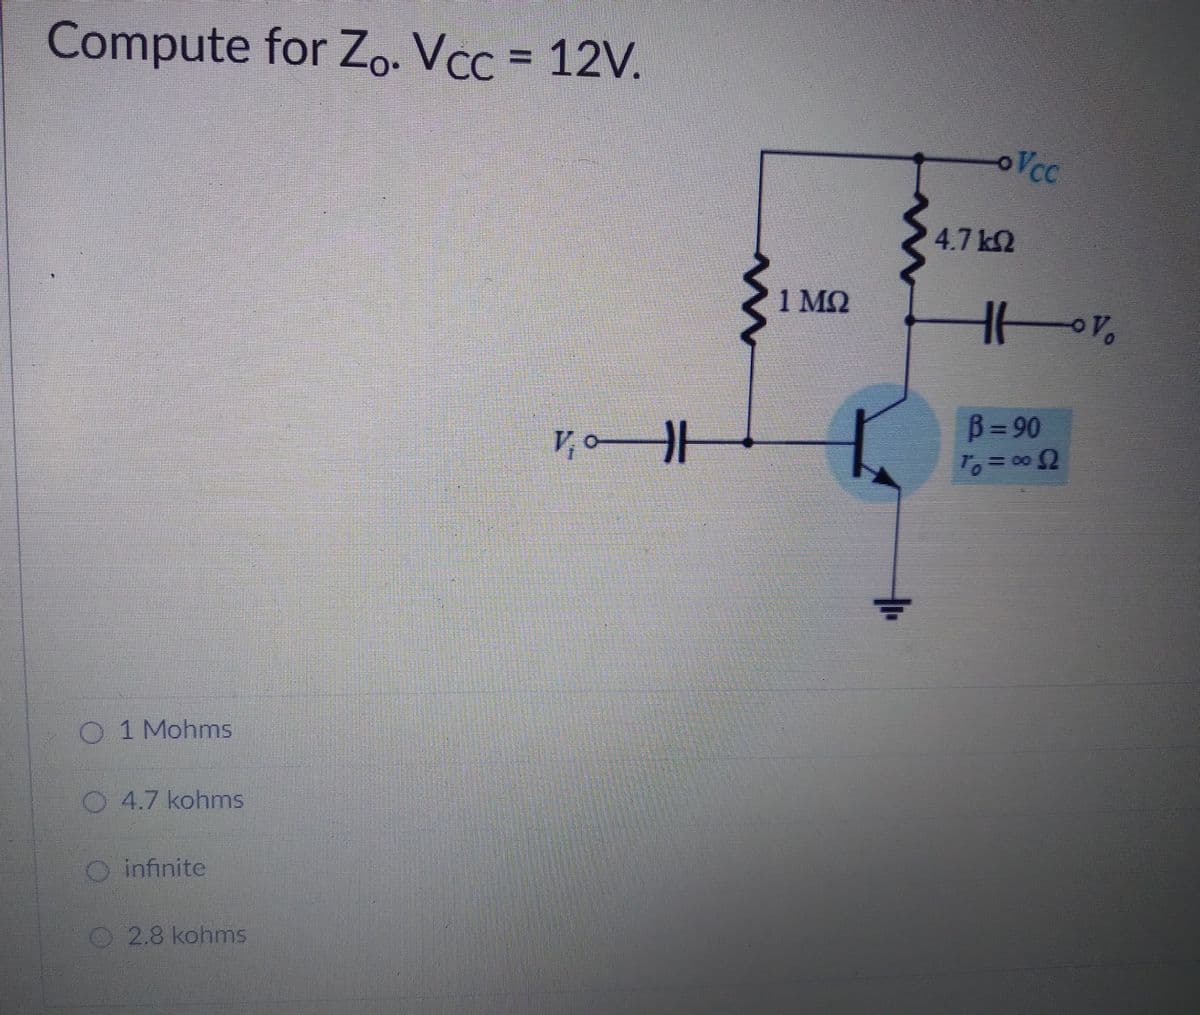 Compute for Z.. Vcc = 12V.
oVcc
4.7 k2
1 MQ
B= 90
O 1 Mohms
O 4.7 kohmns
O infinite
O2.8 kohms
